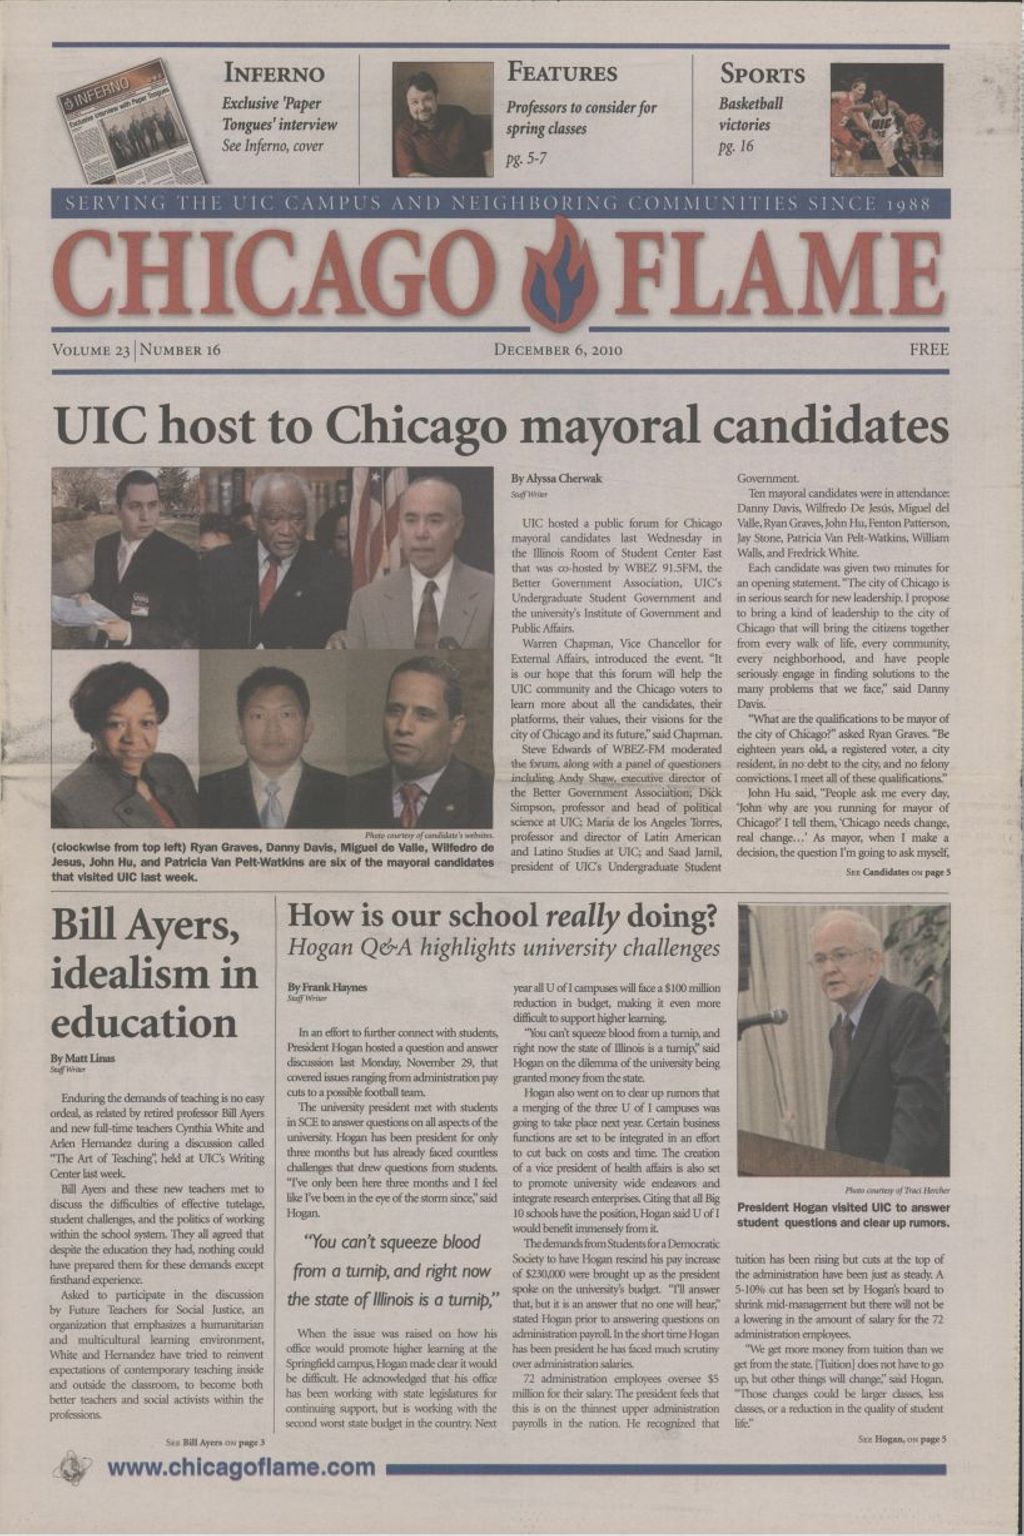 Chicago Flame (December 6, 2010)